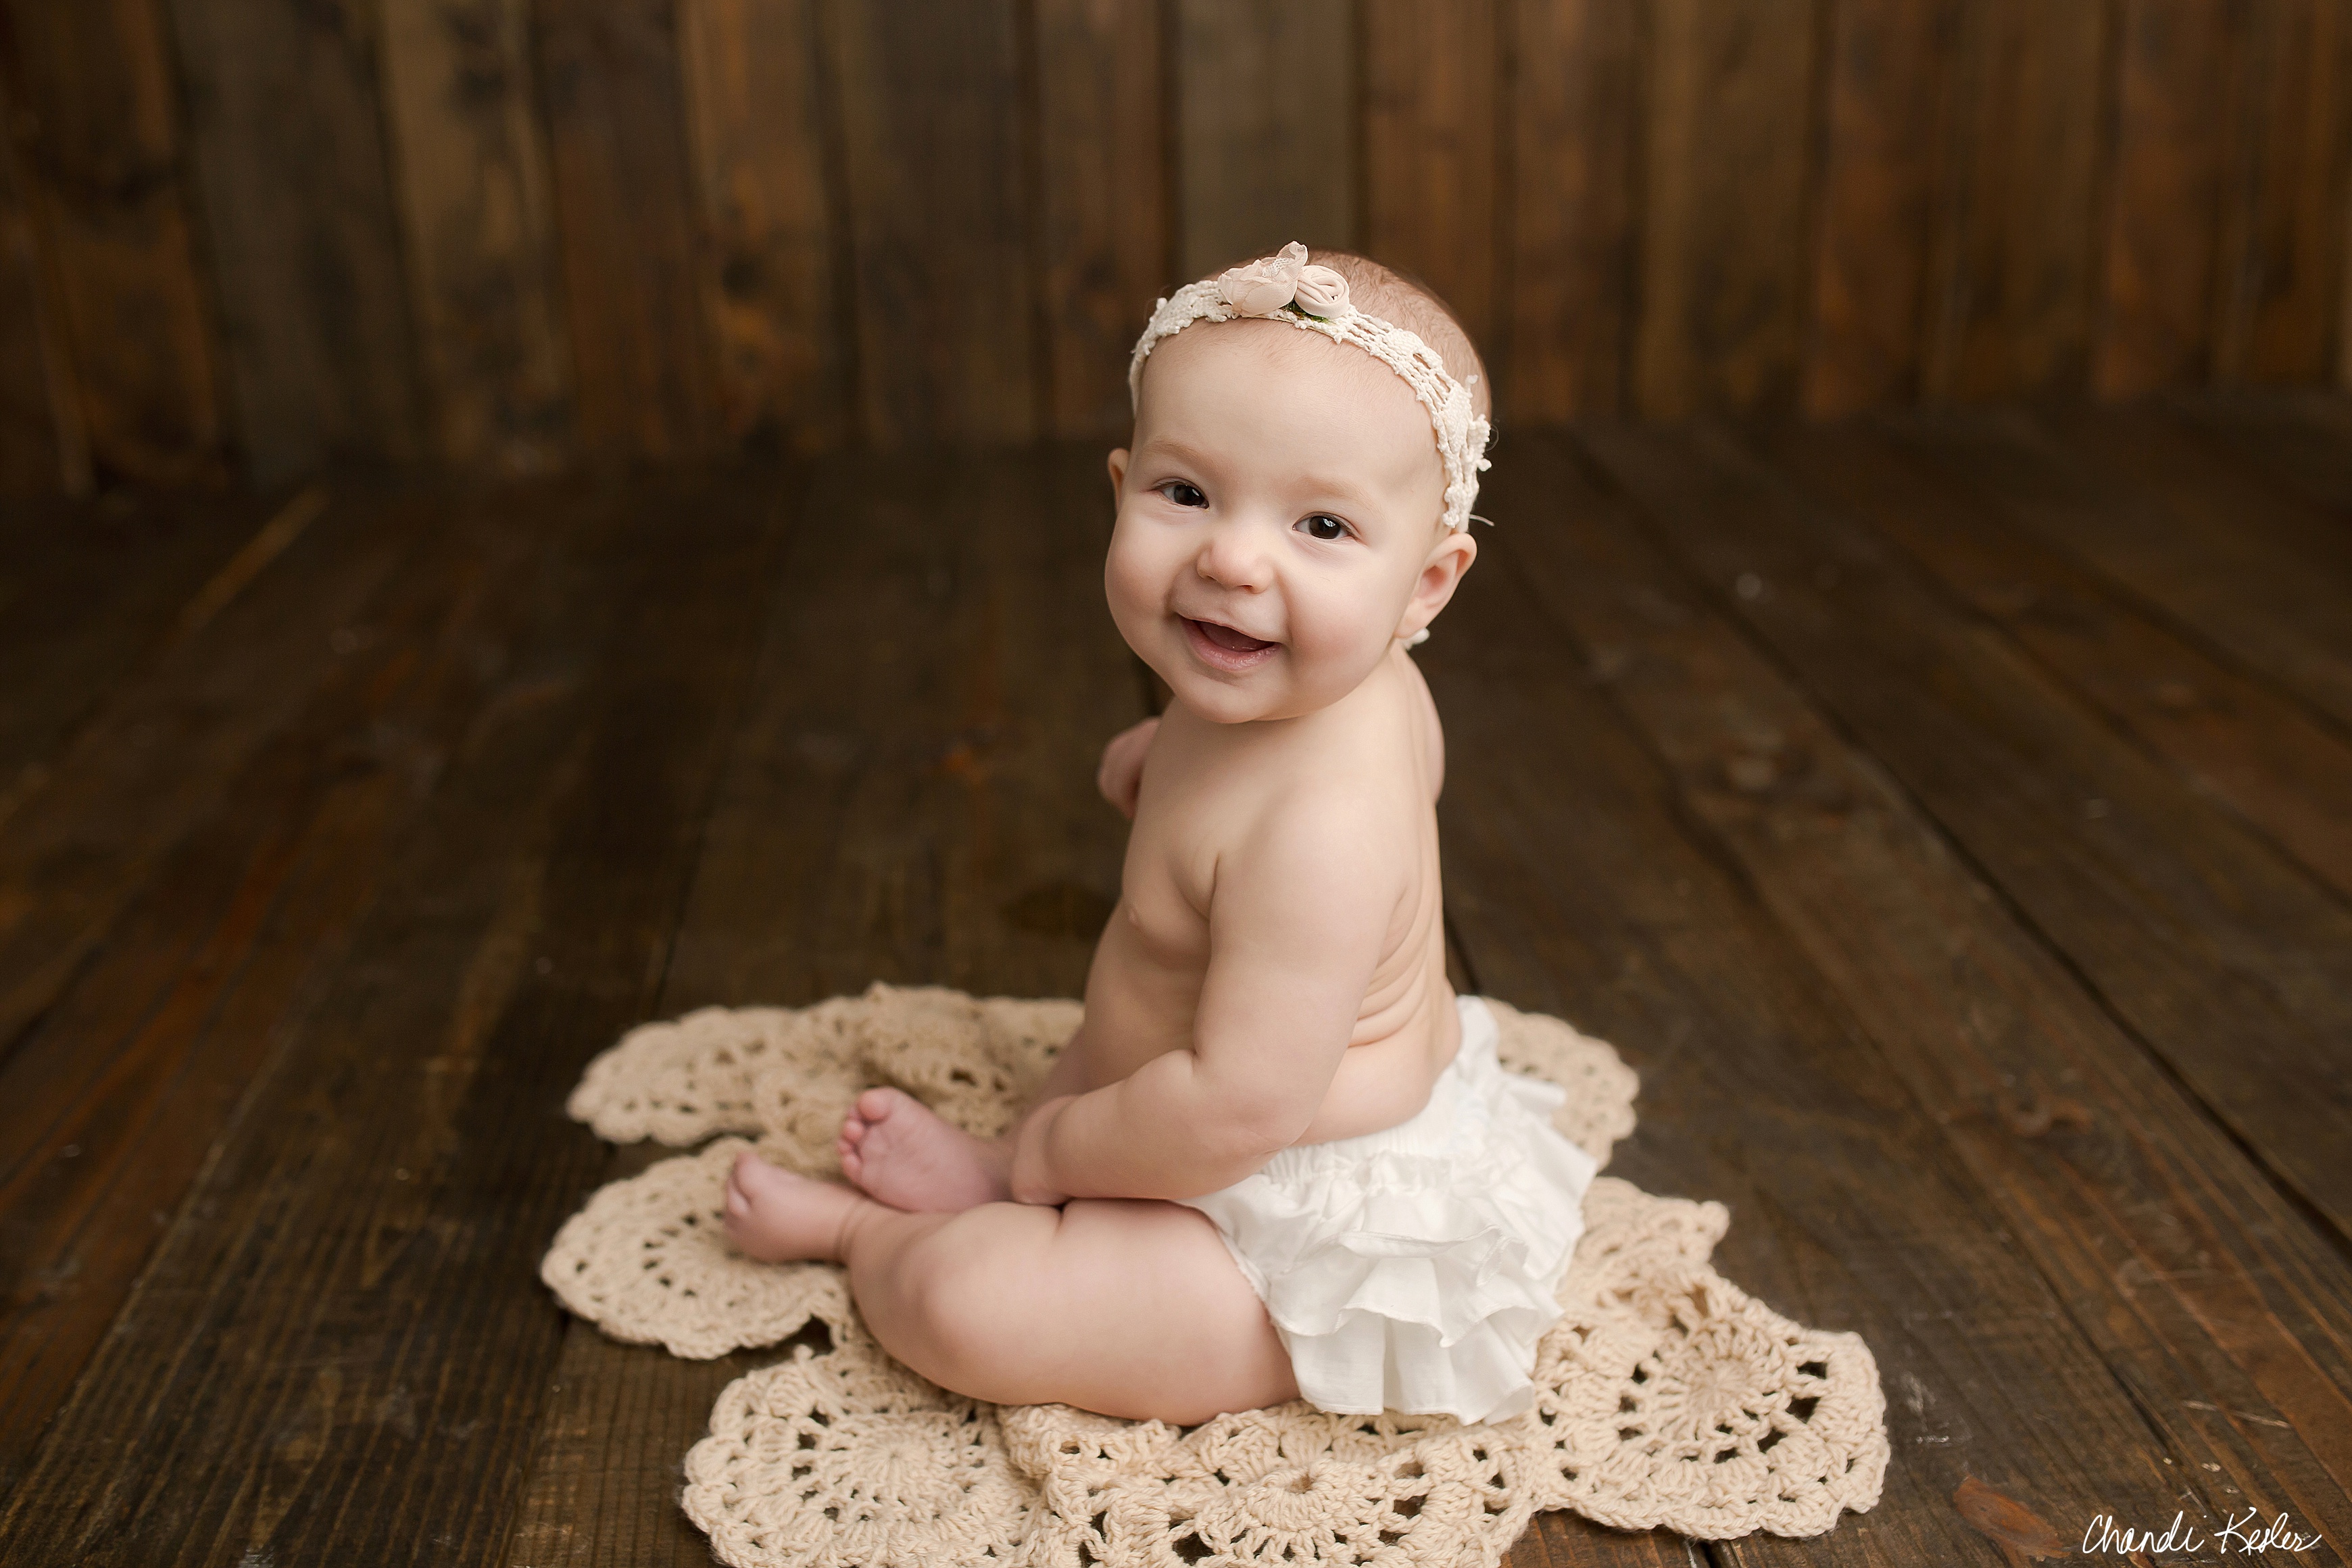 Best Newborn Photographer Central IL | Chandi Kesler Photography